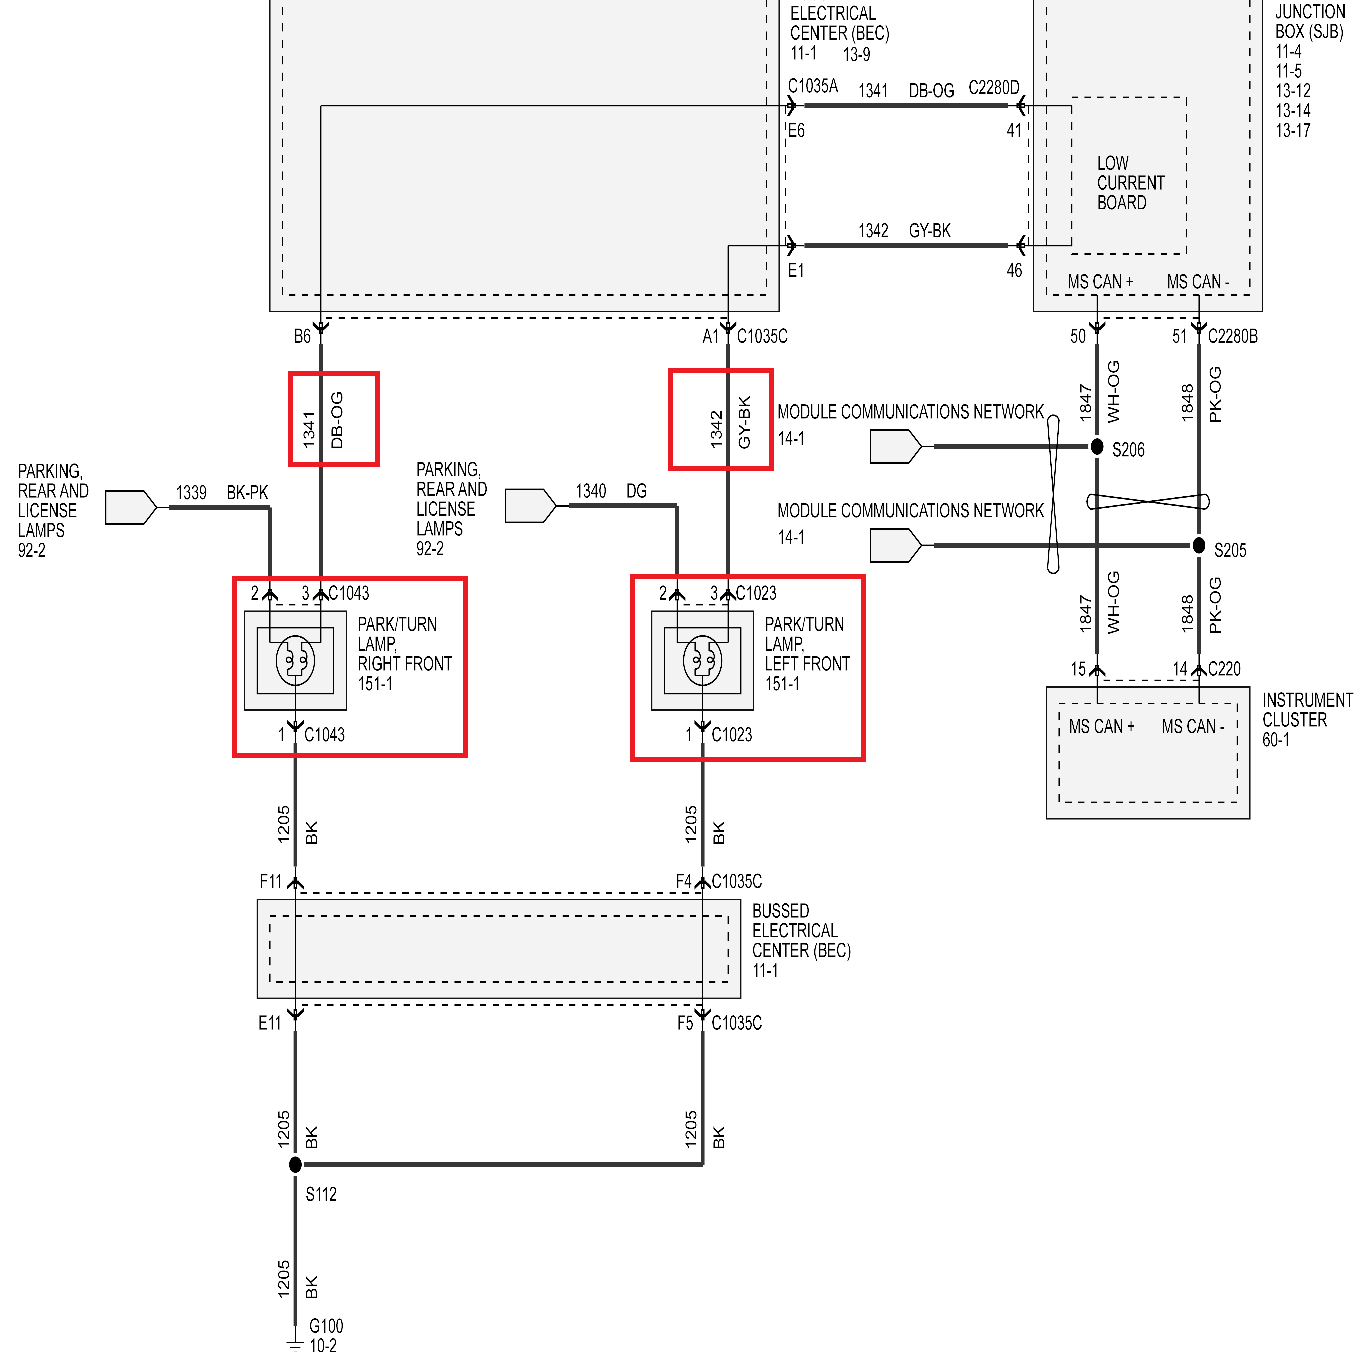 Ford Turn Signal Wiring Diagram from cimg1.ibsrv.net